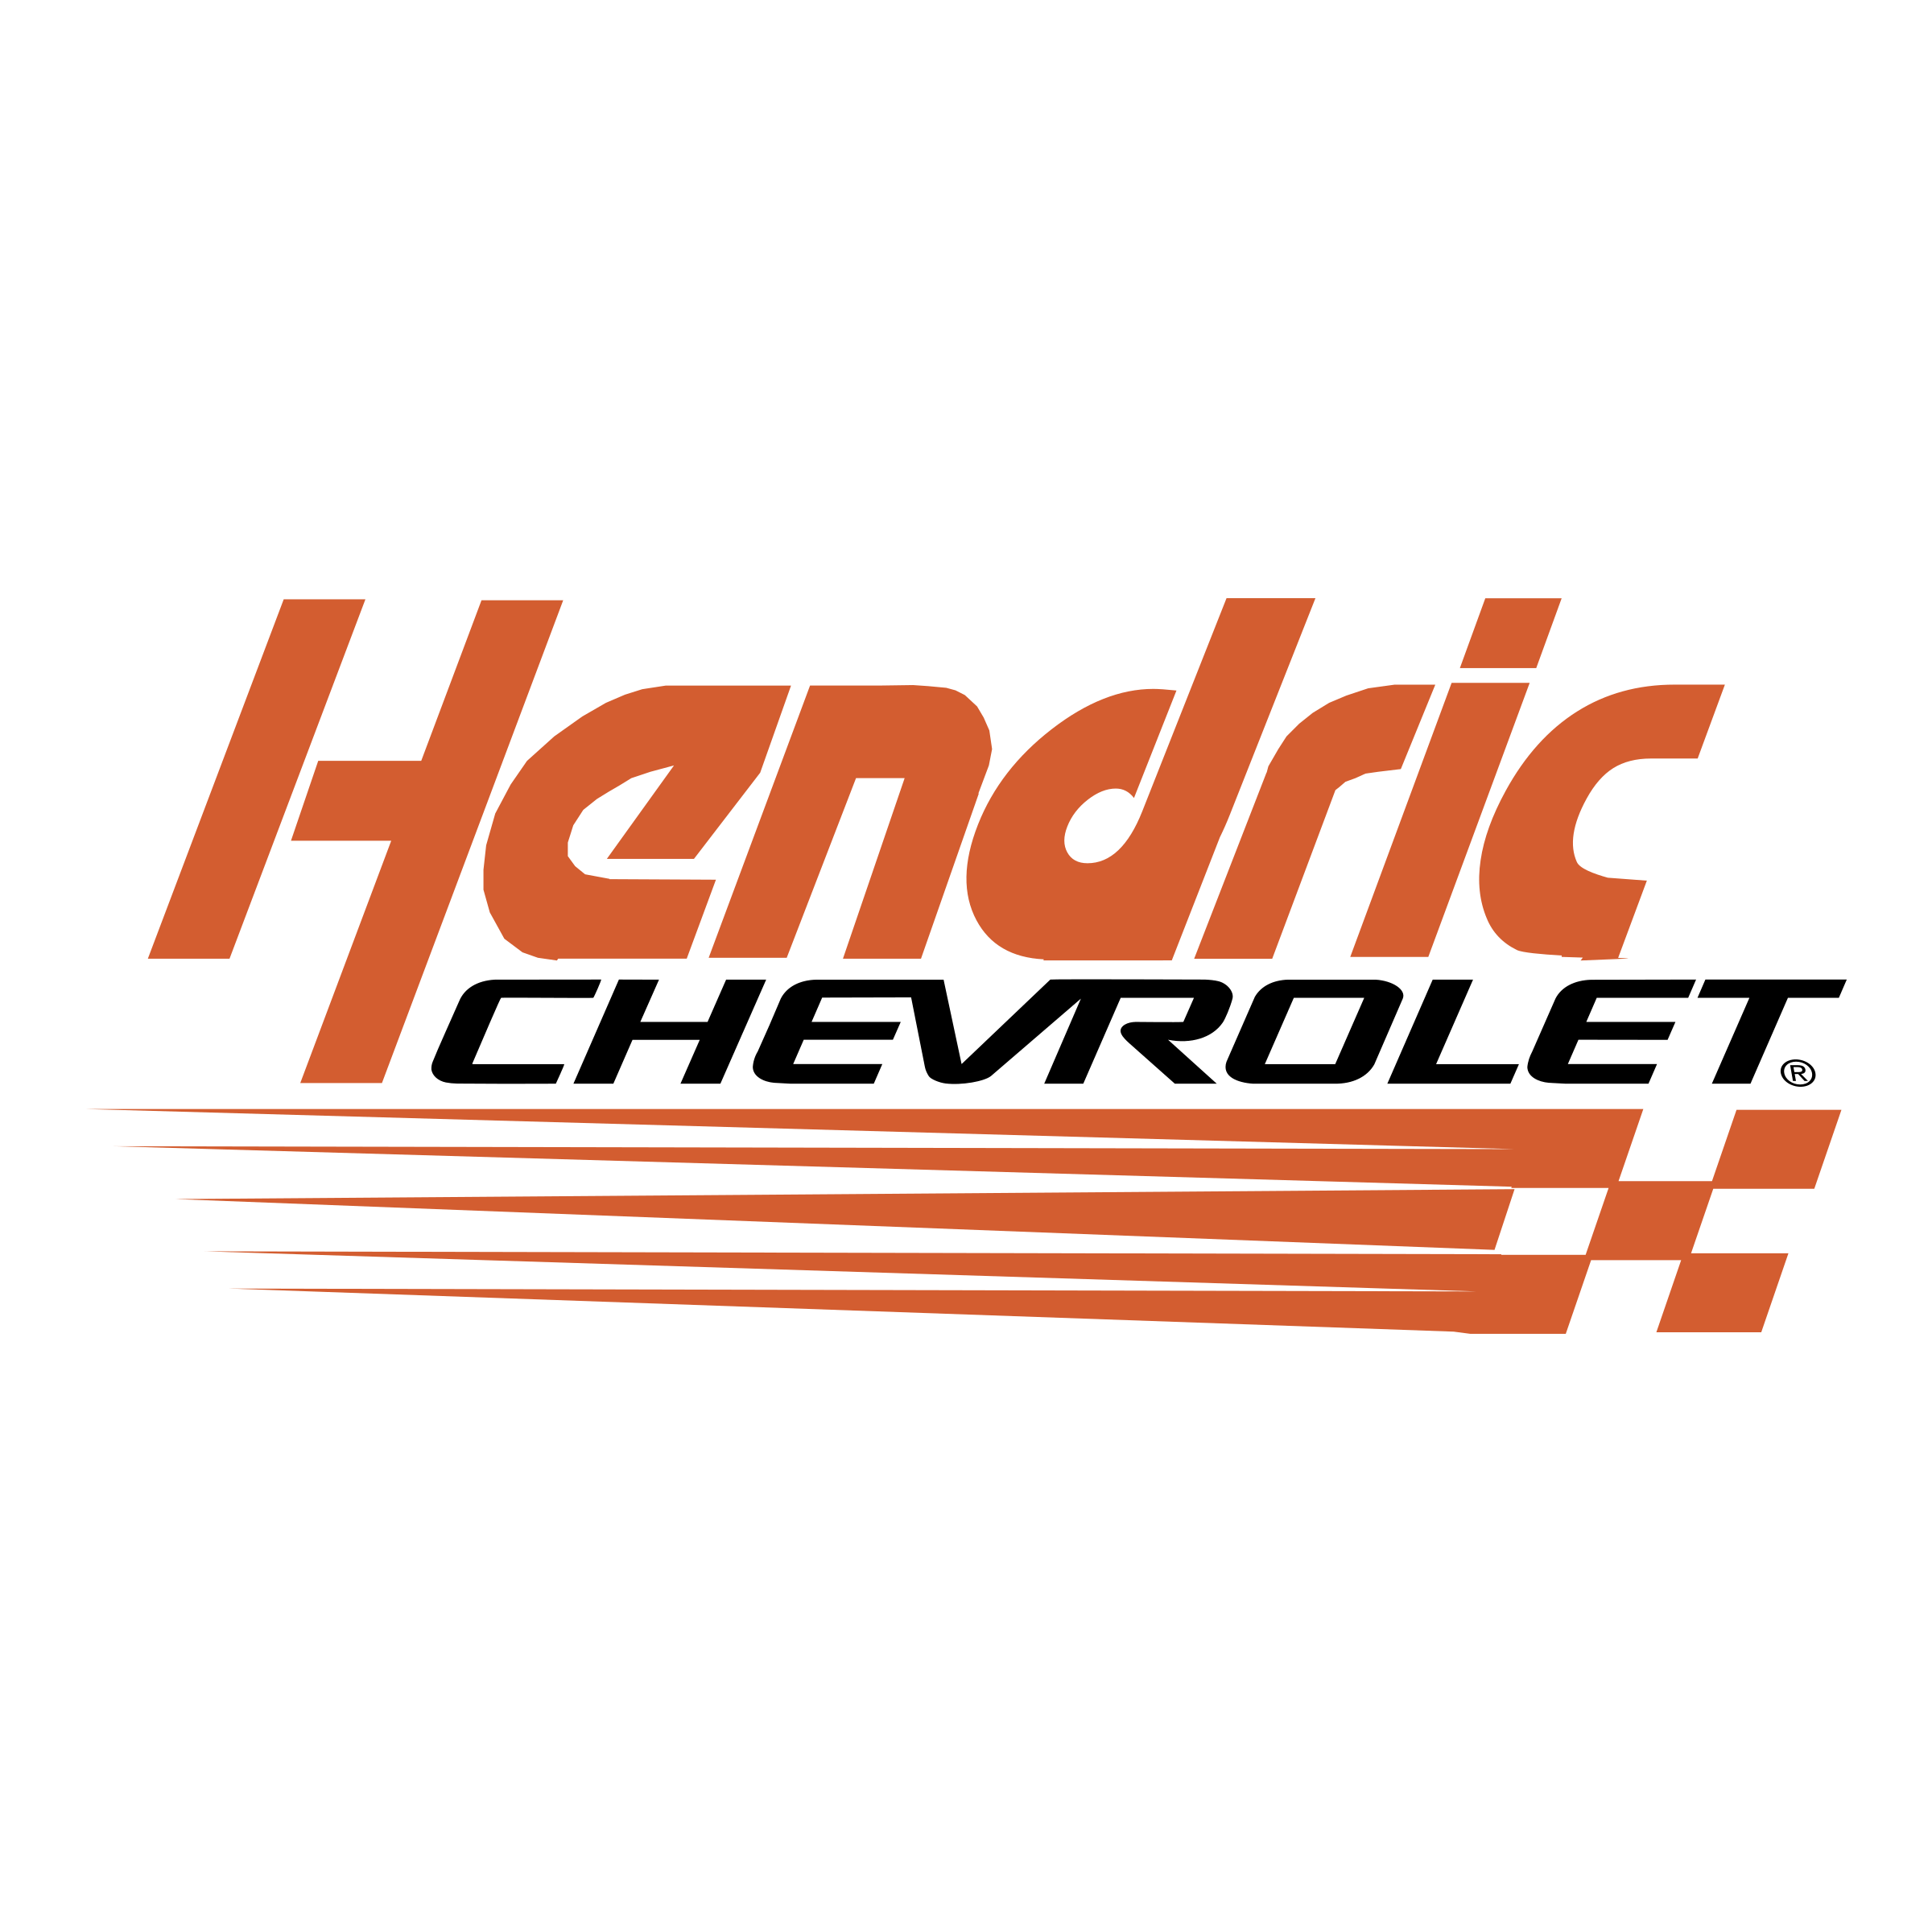 Hendrick Logo - Hendrick Chevrolet Logo PNG Transparent & SVG Vector - Freebie Supply